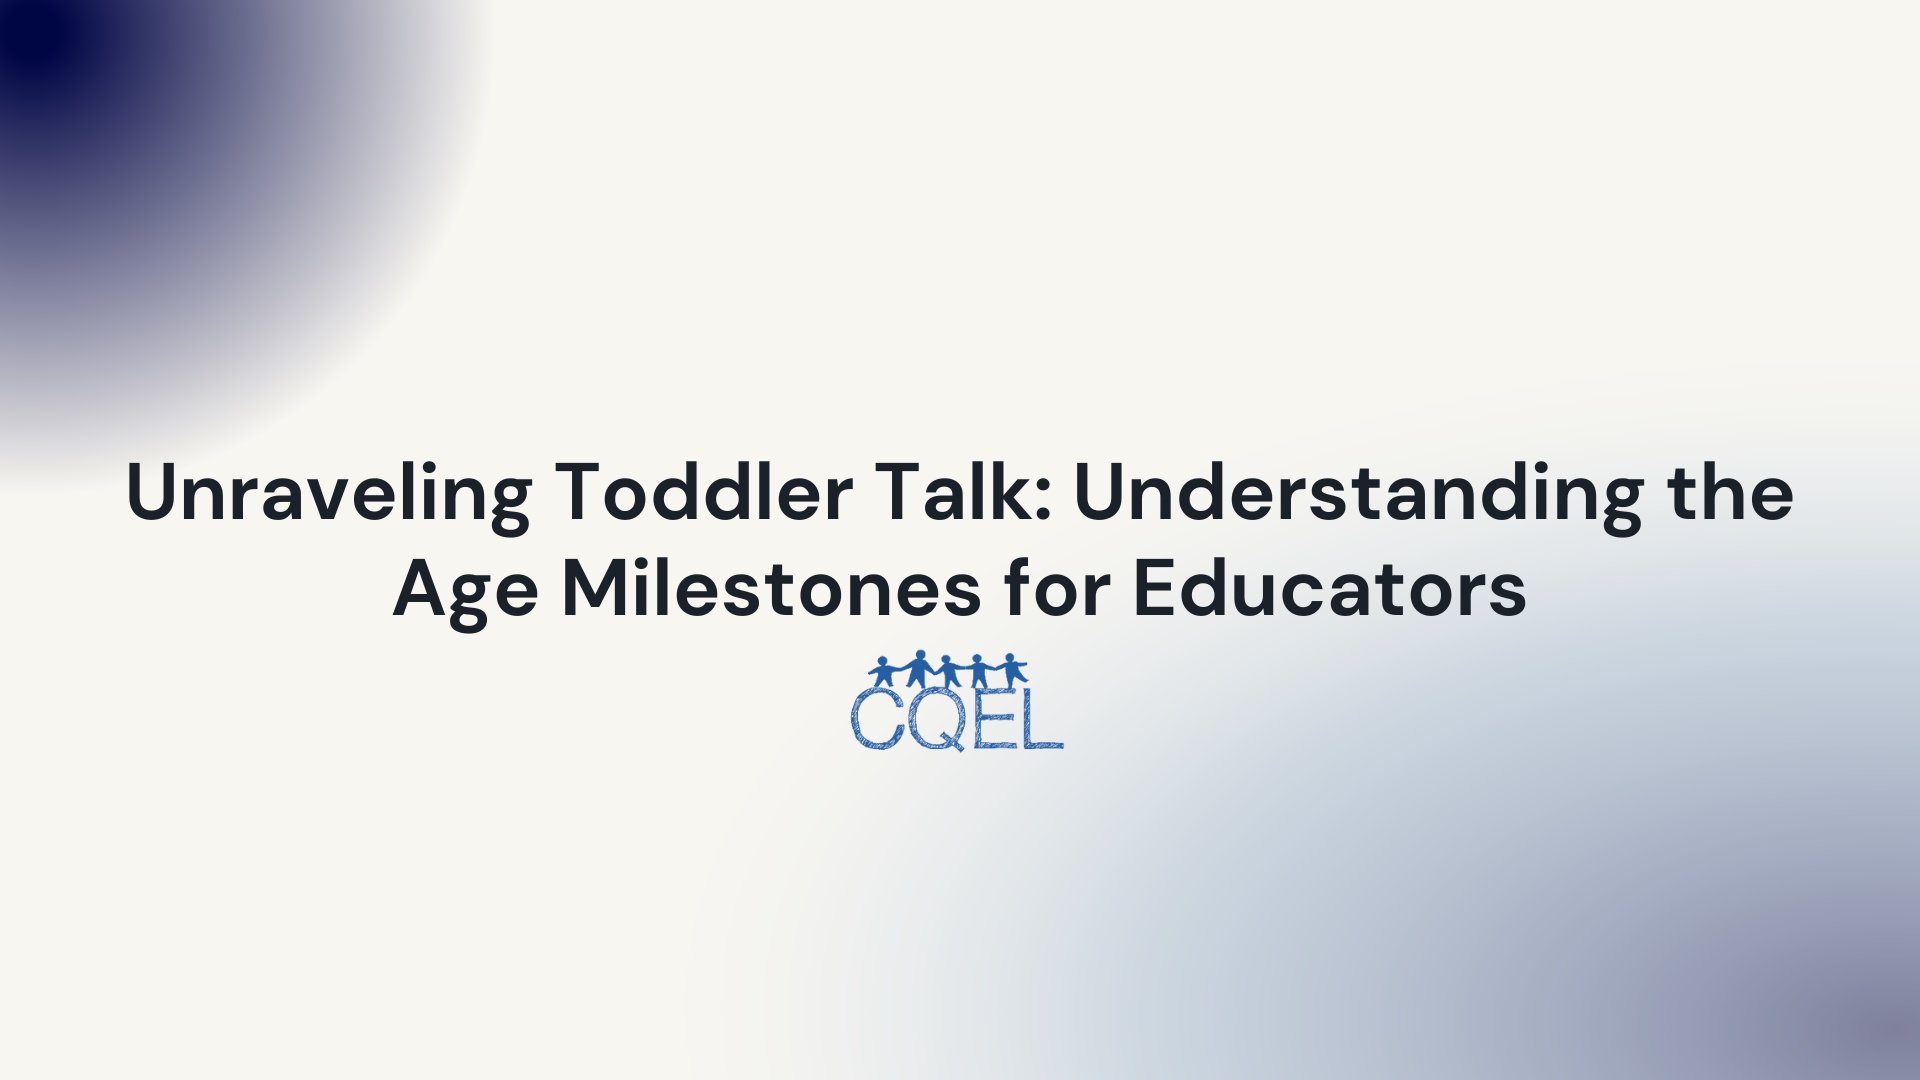 Unraveling Toddler Talk: Understanding the Age Milestones for Educators